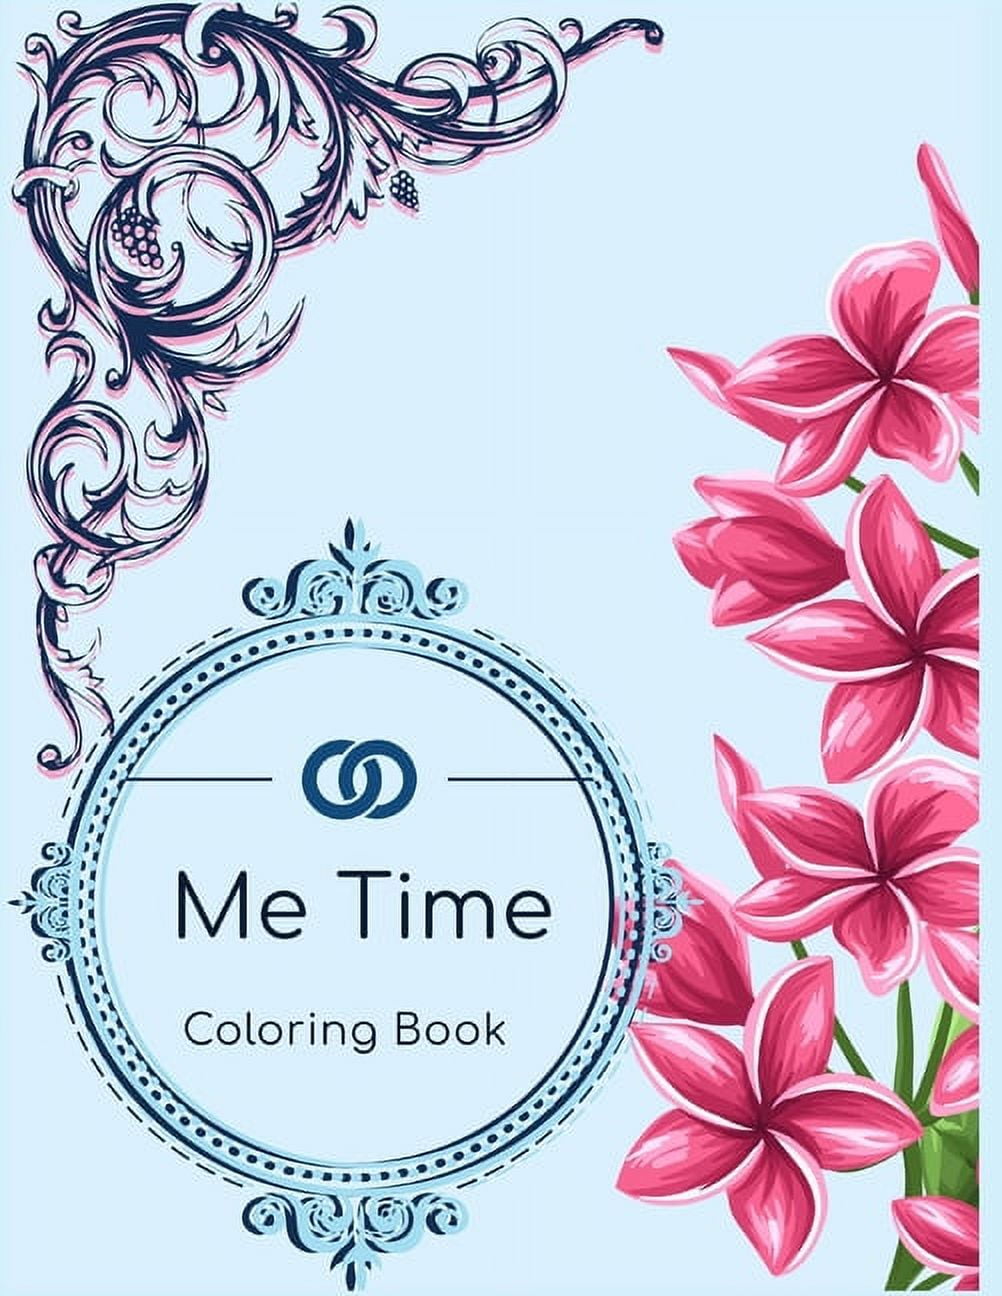 Pattern Coloring Book (Paperback)